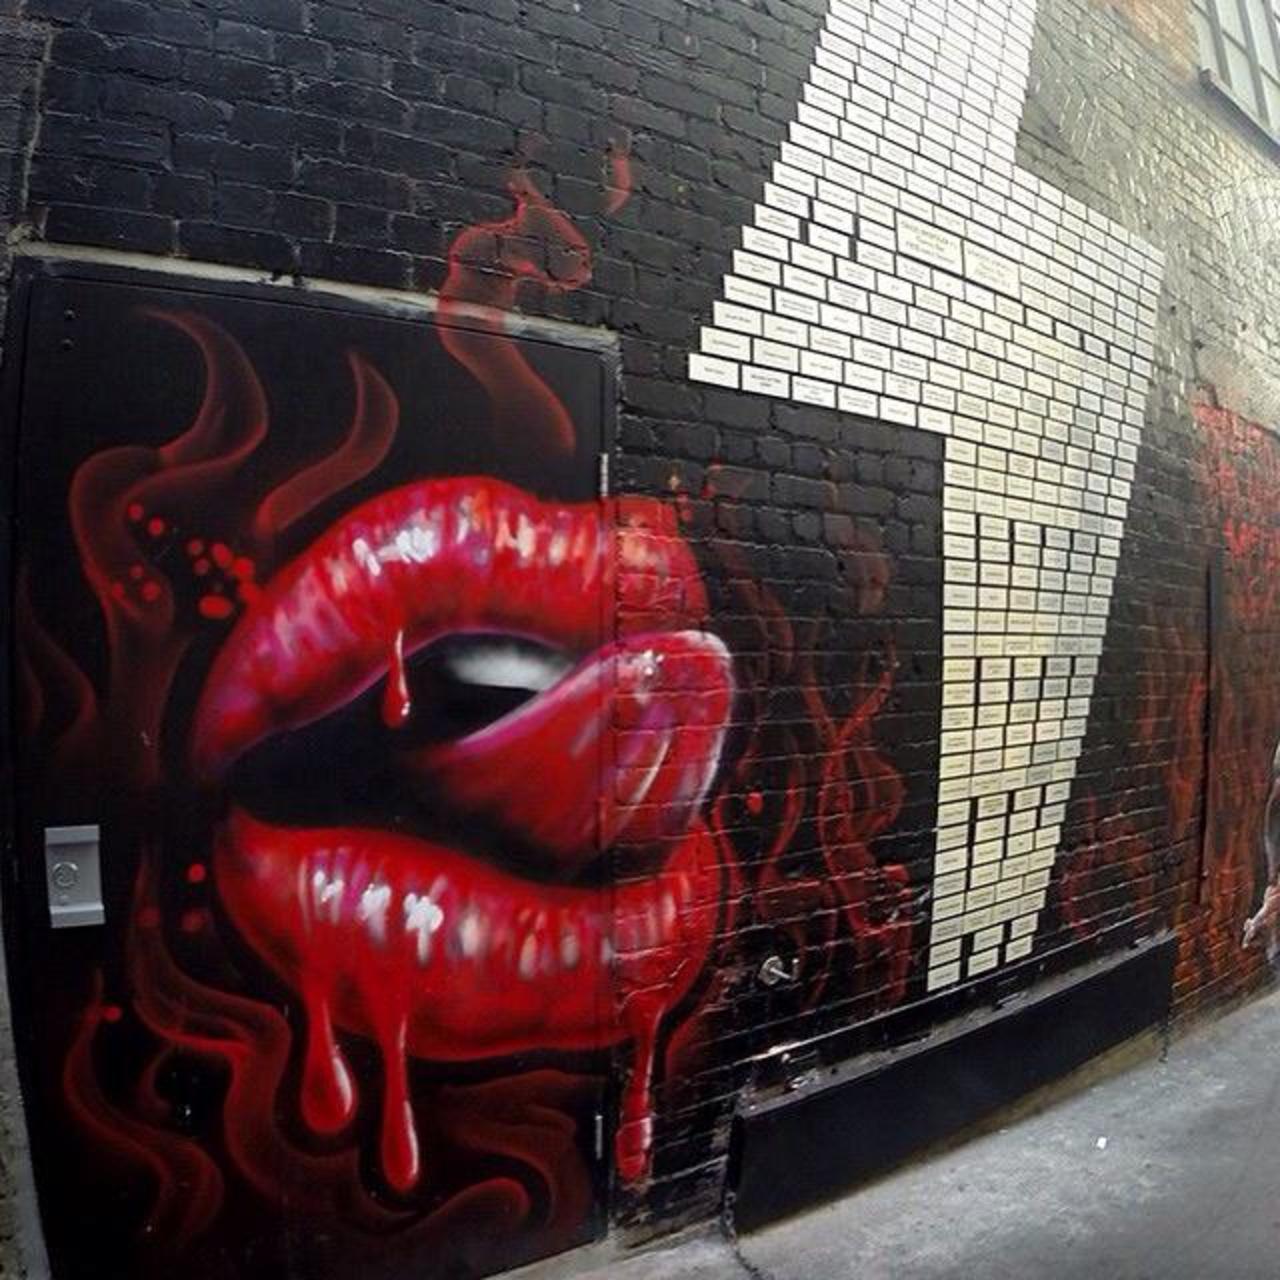 Latest Street Art by MikeMaka 

#art #arte #graffiti #streetart http://t.co/F47xUbnPiE